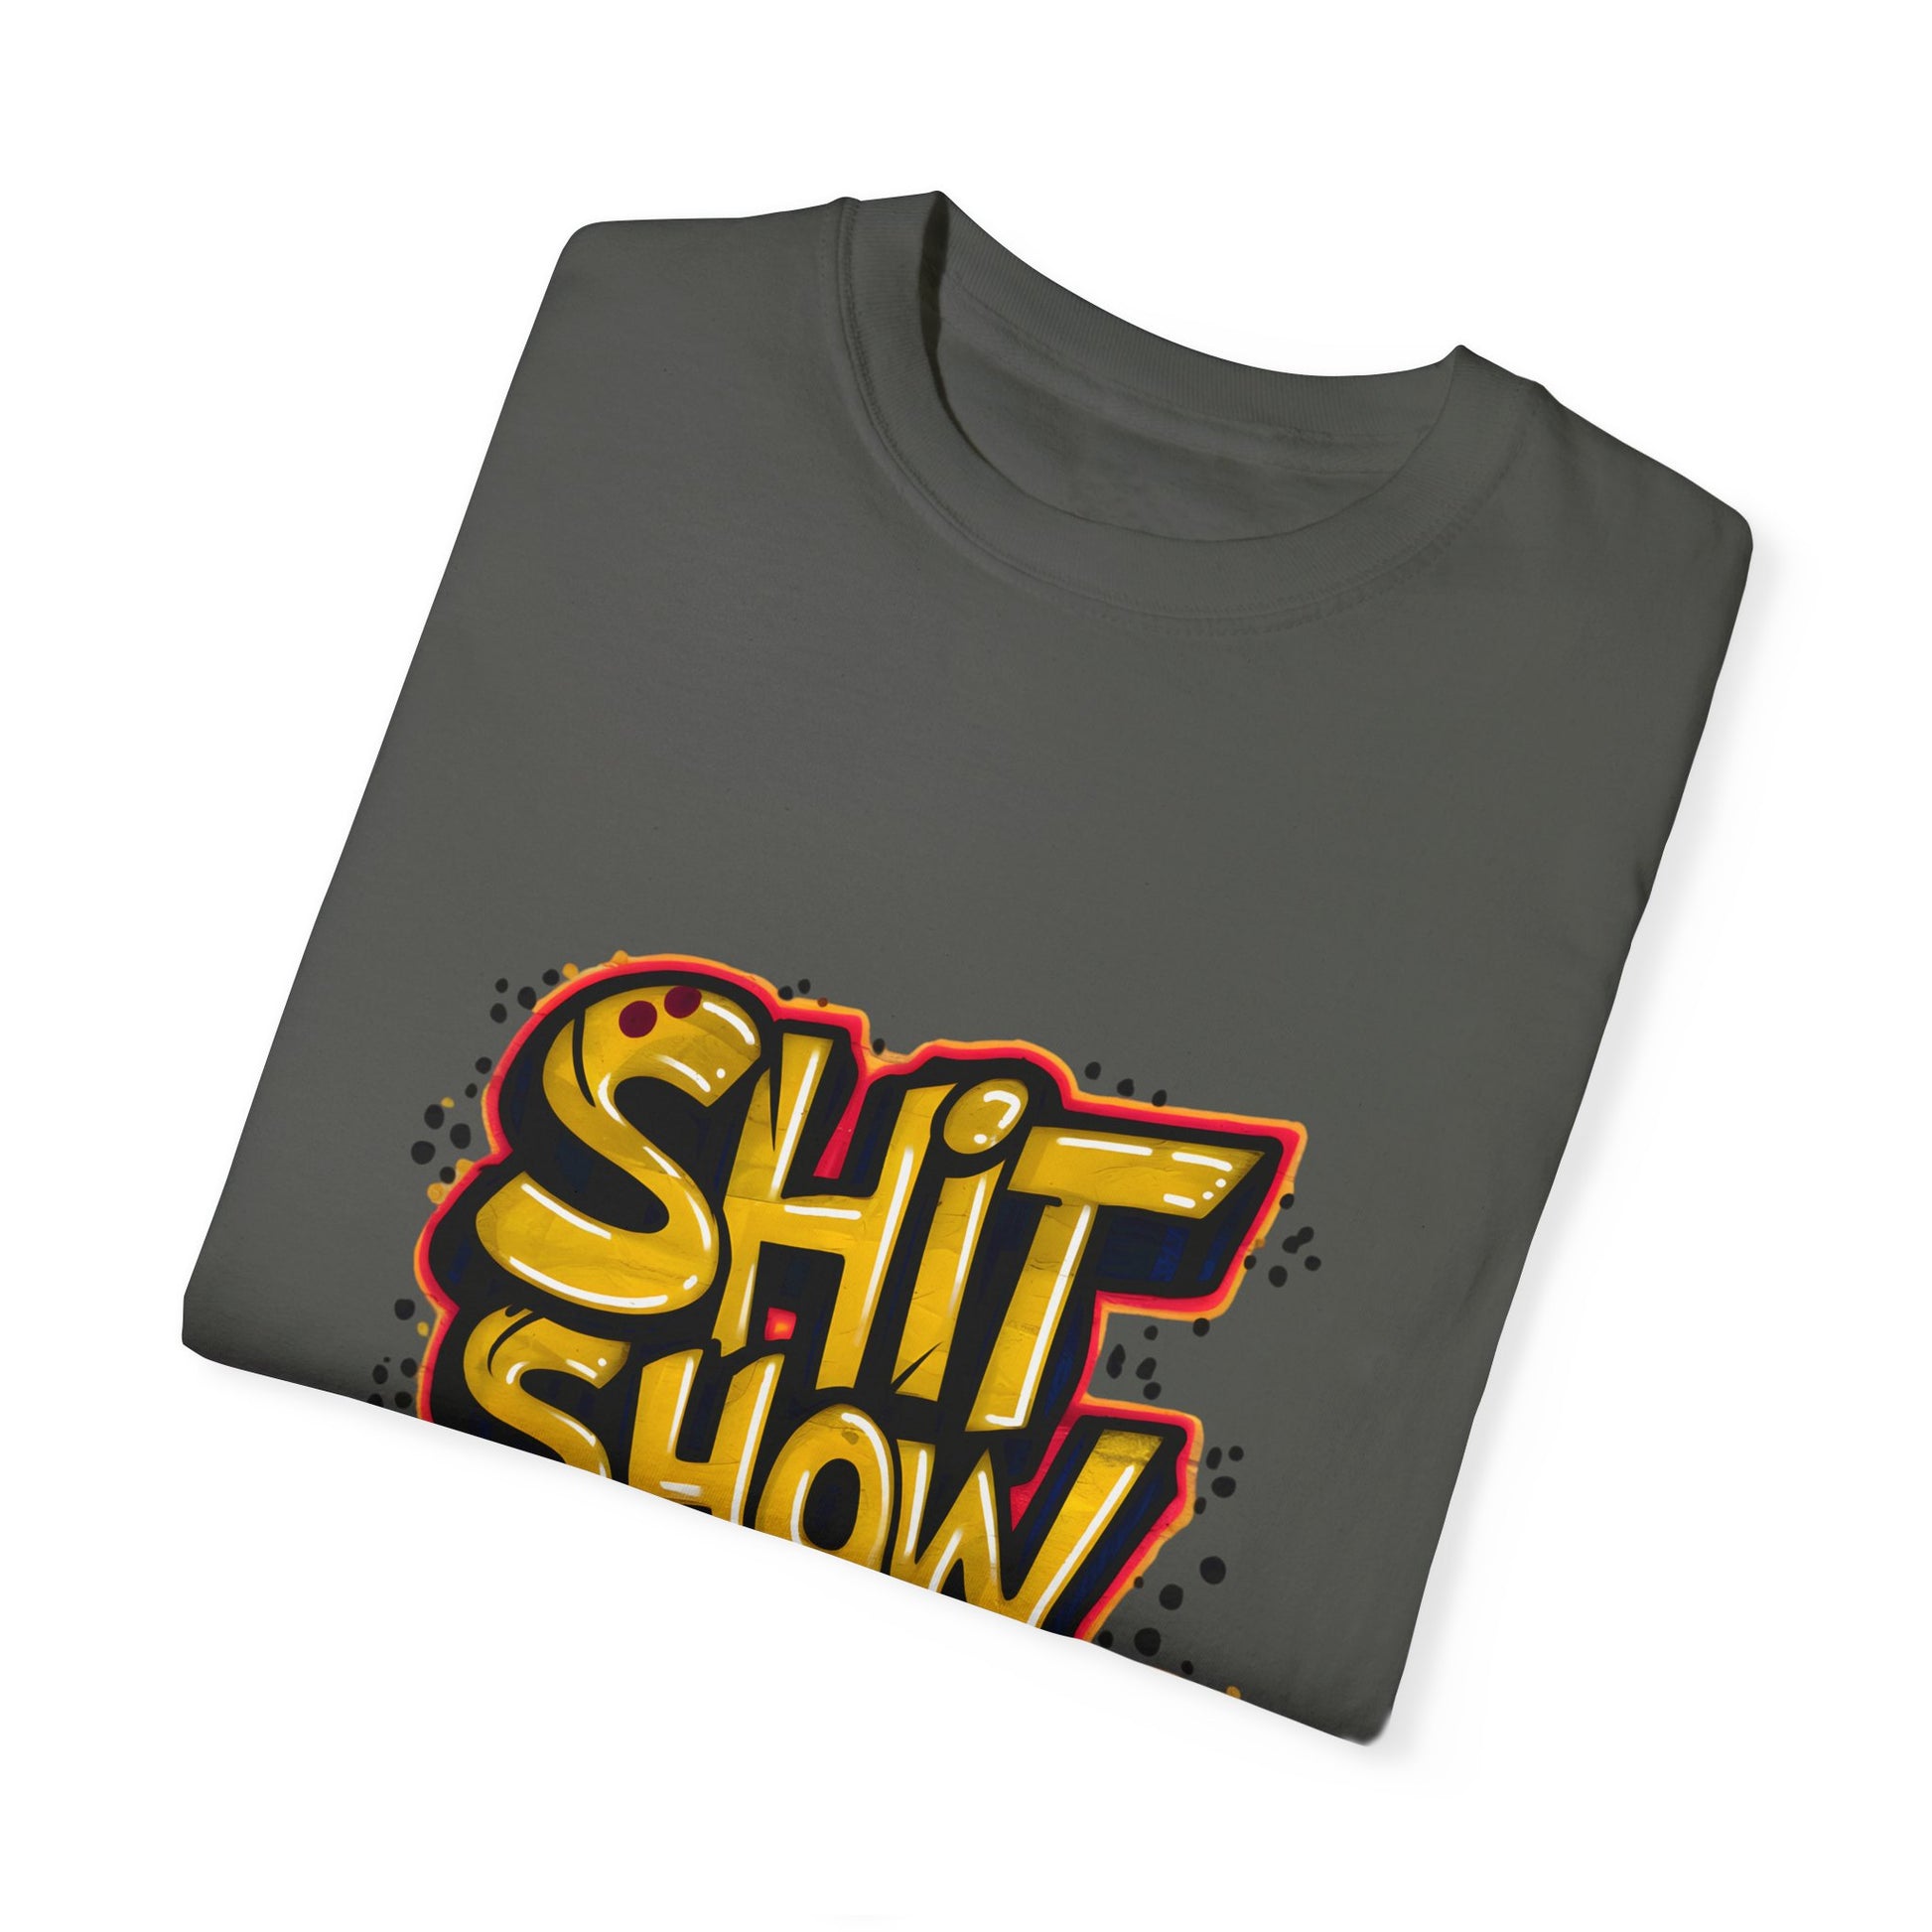 Shit Show Supervisor Urban Sarcastic Graphic Unisex Garment Dyed T-shirt Cotton Funny Humorous Graphic Soft Premium Unisex Men Women Pepper T-shirt Birthday Gift-50